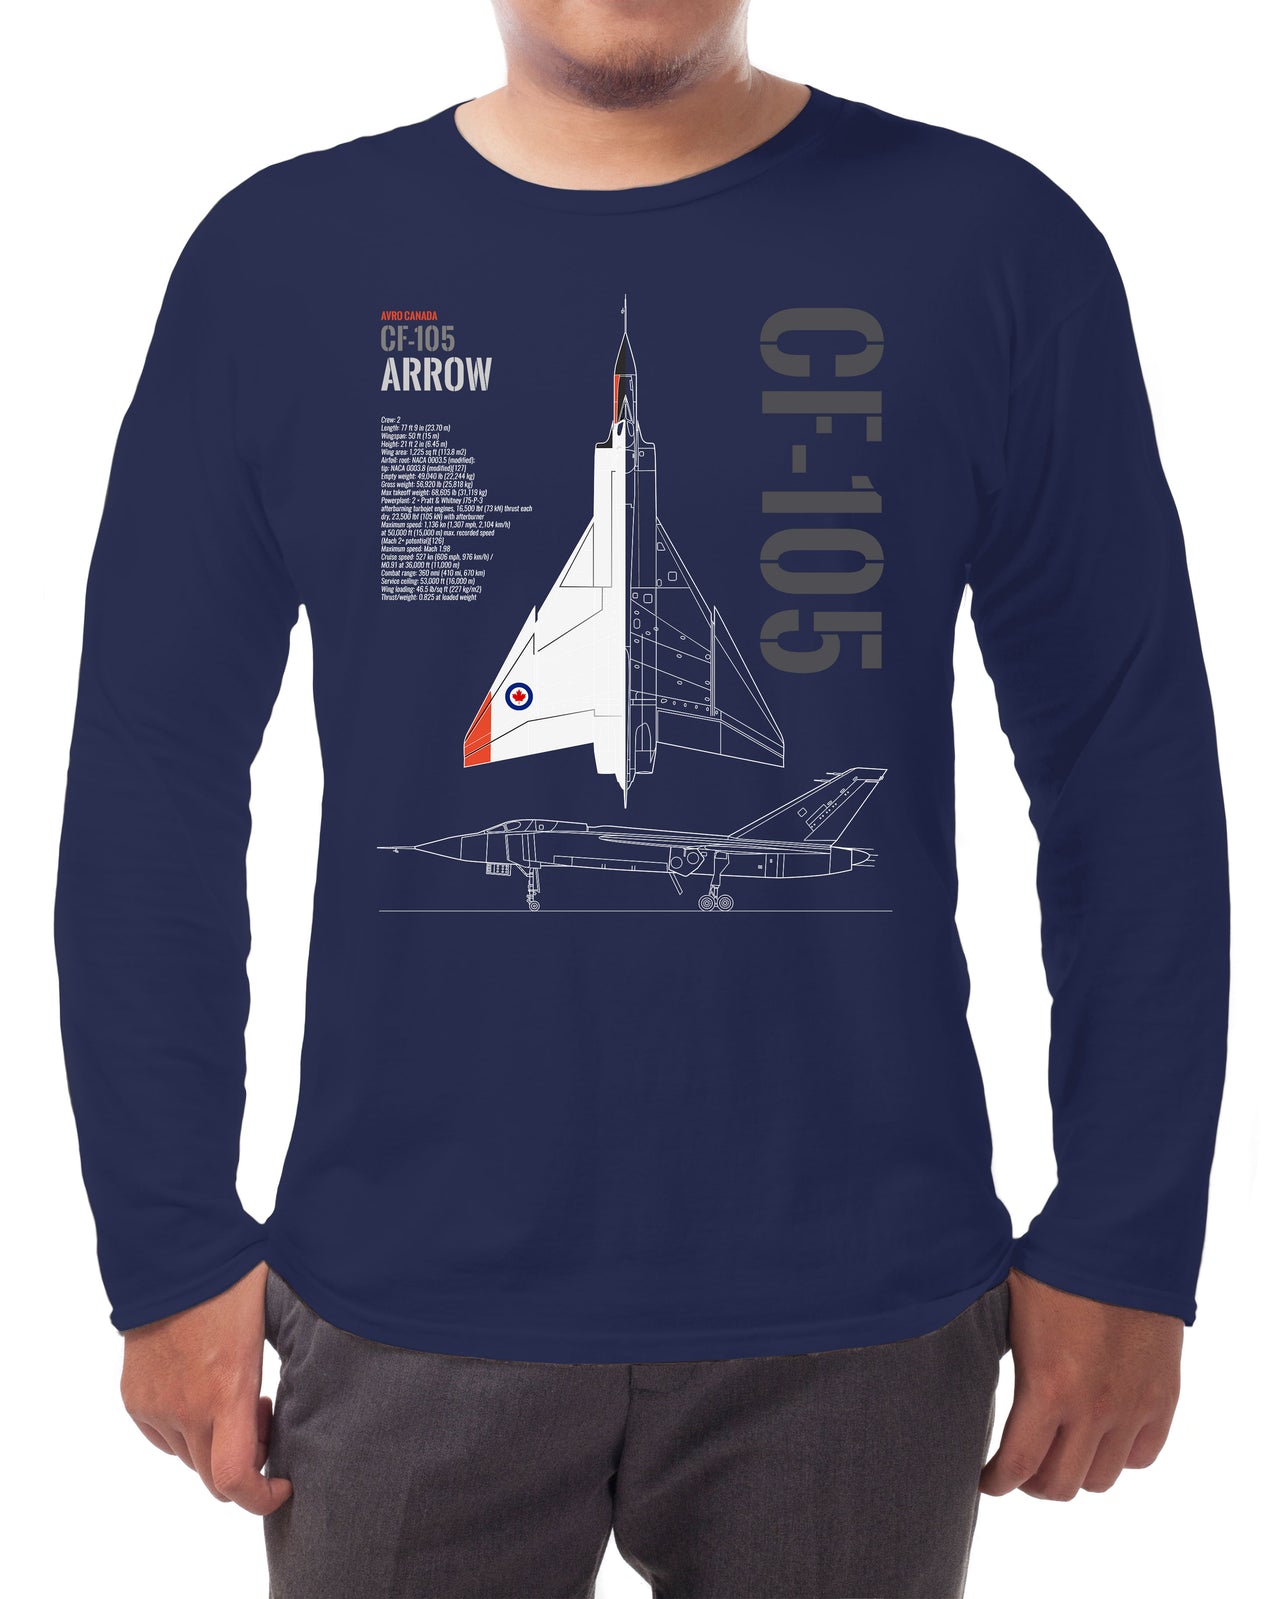 Avro Arrow - Long-sleeve T-shirt